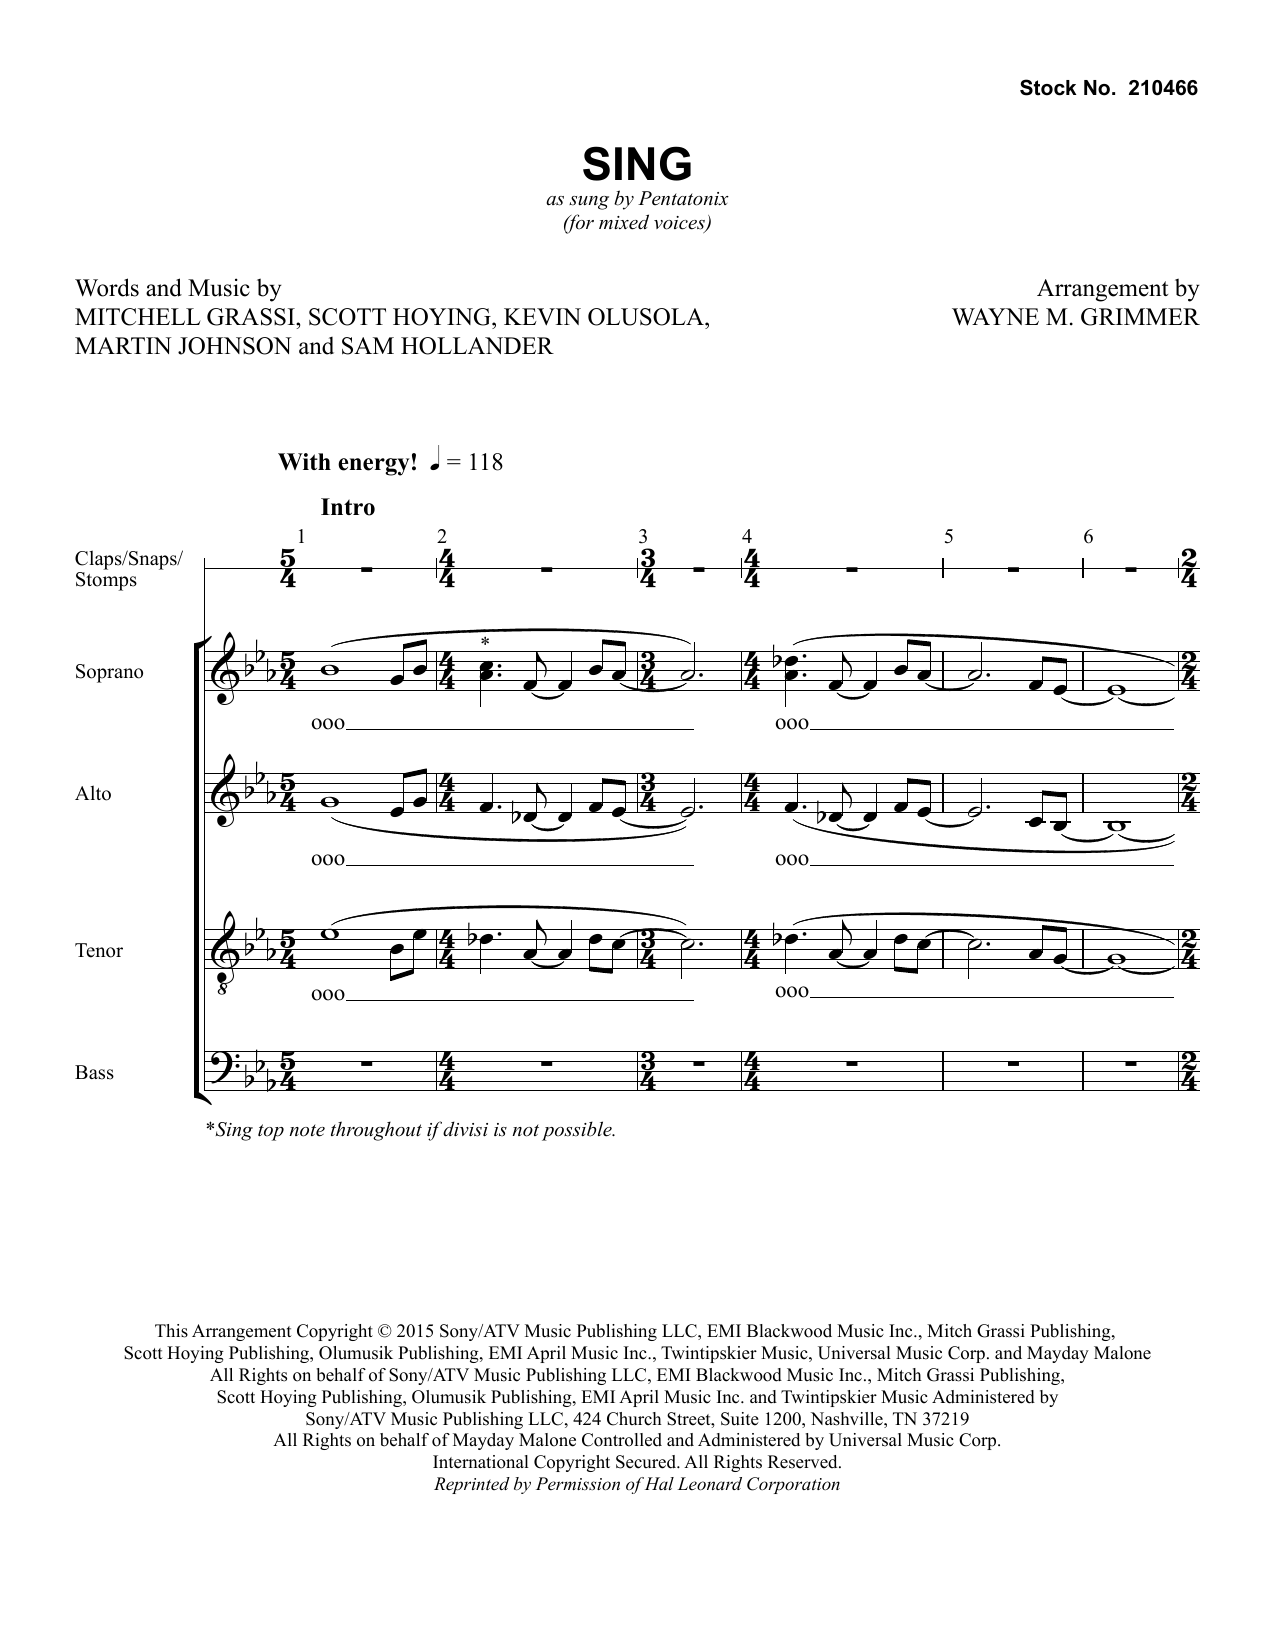 Pentatonix Sing (arr. Wayne Grimmer) sheet music notes and chords arranged for TTBB Choir